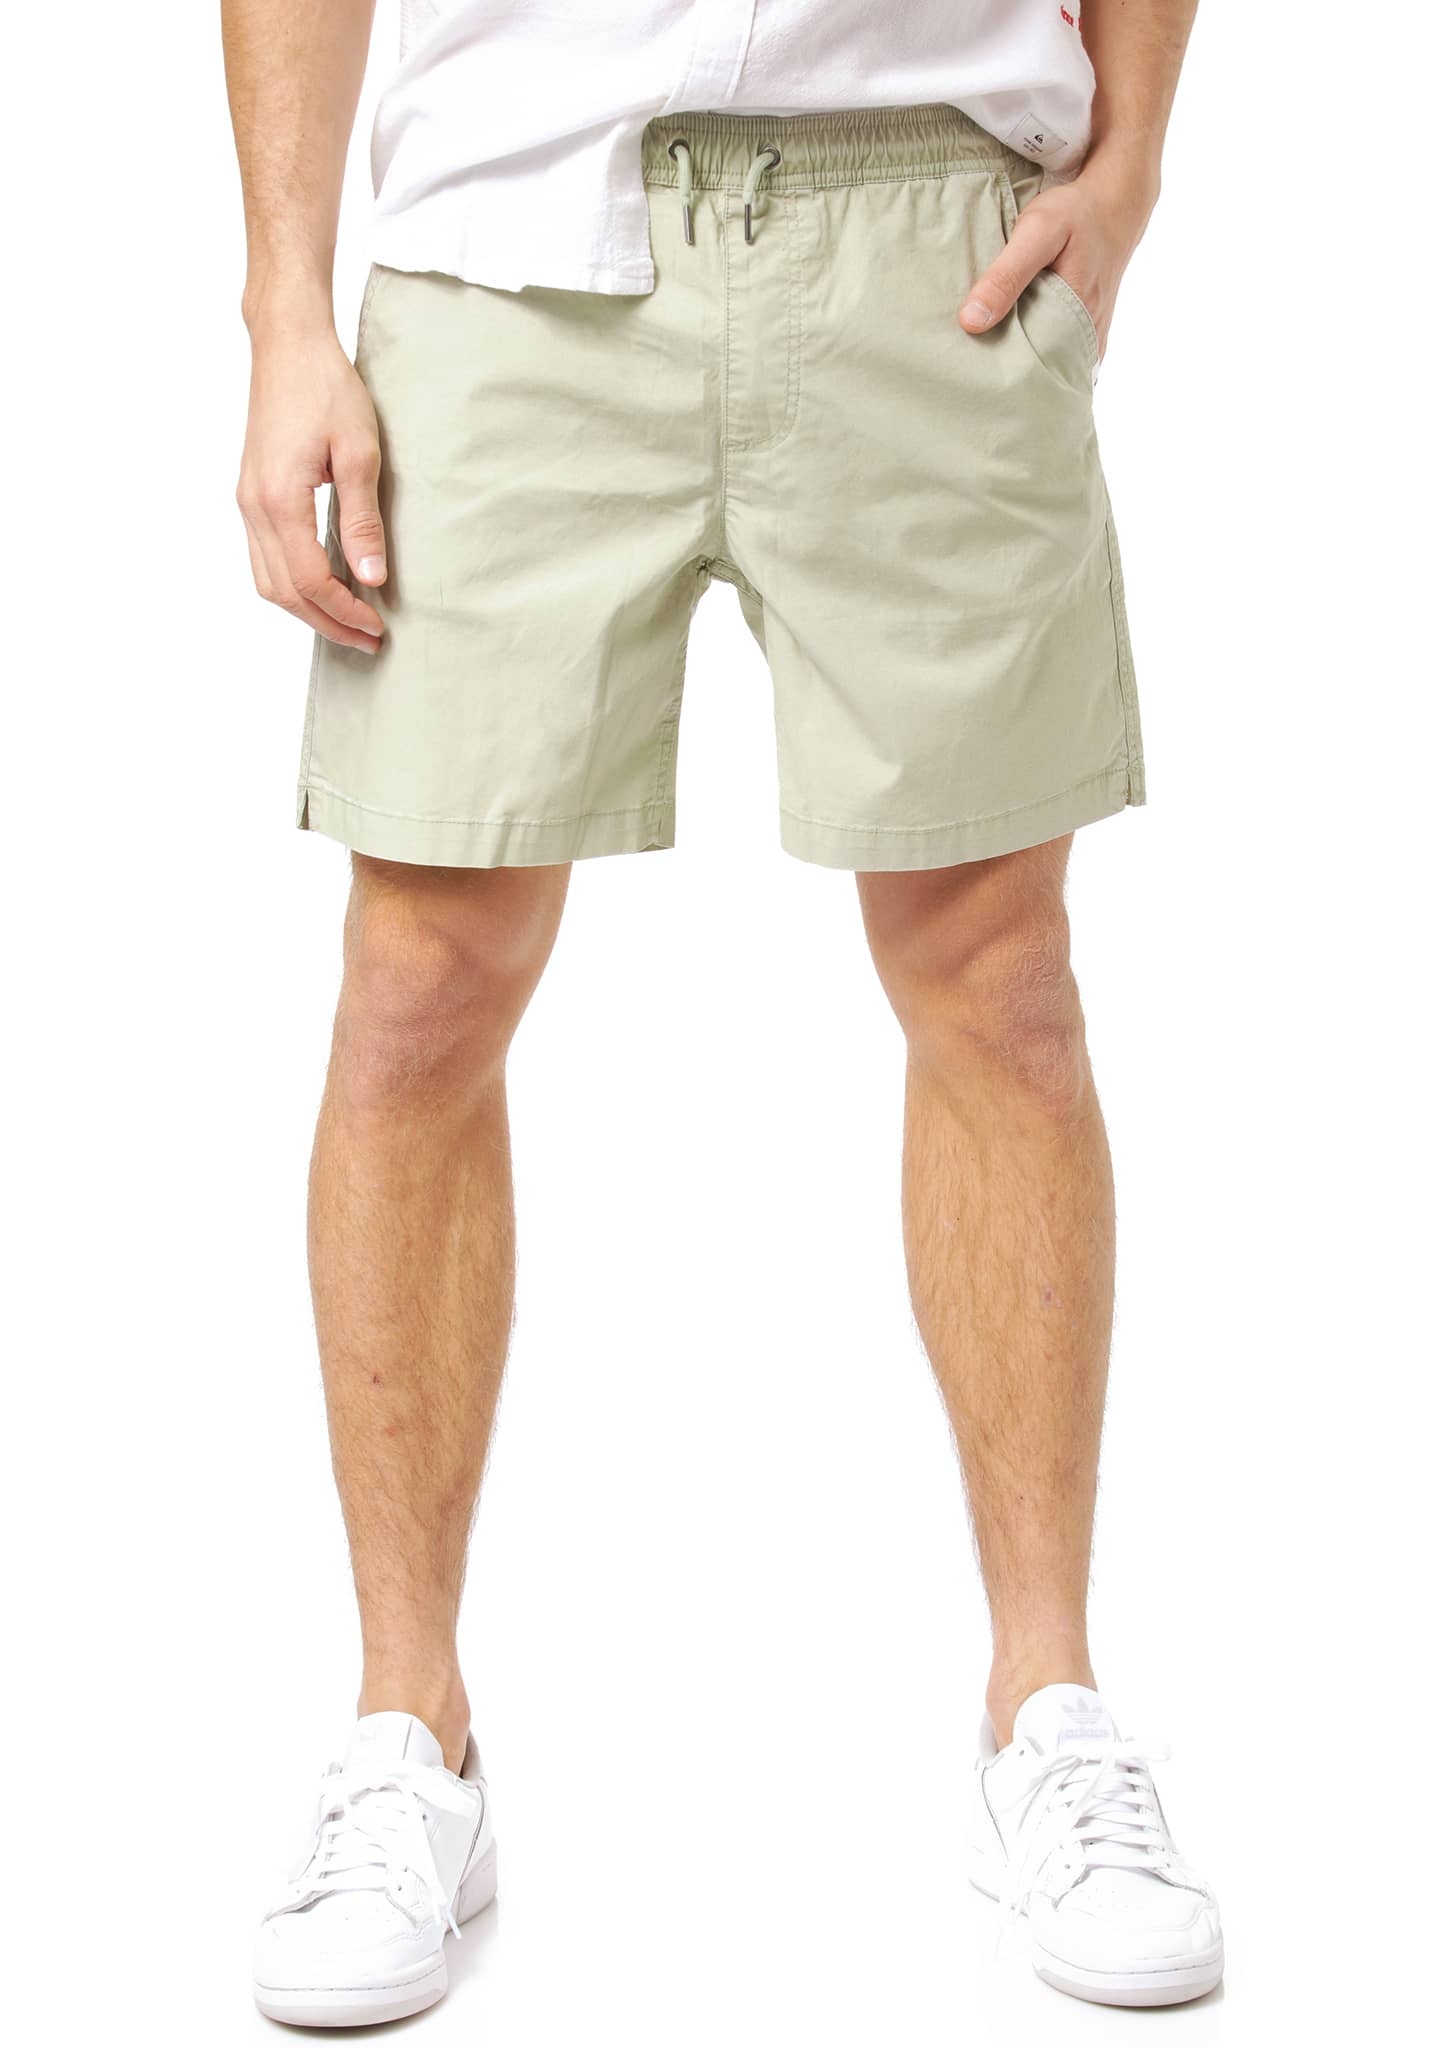 Quiksilver Taxer 17" Shorts wüstensalbei S